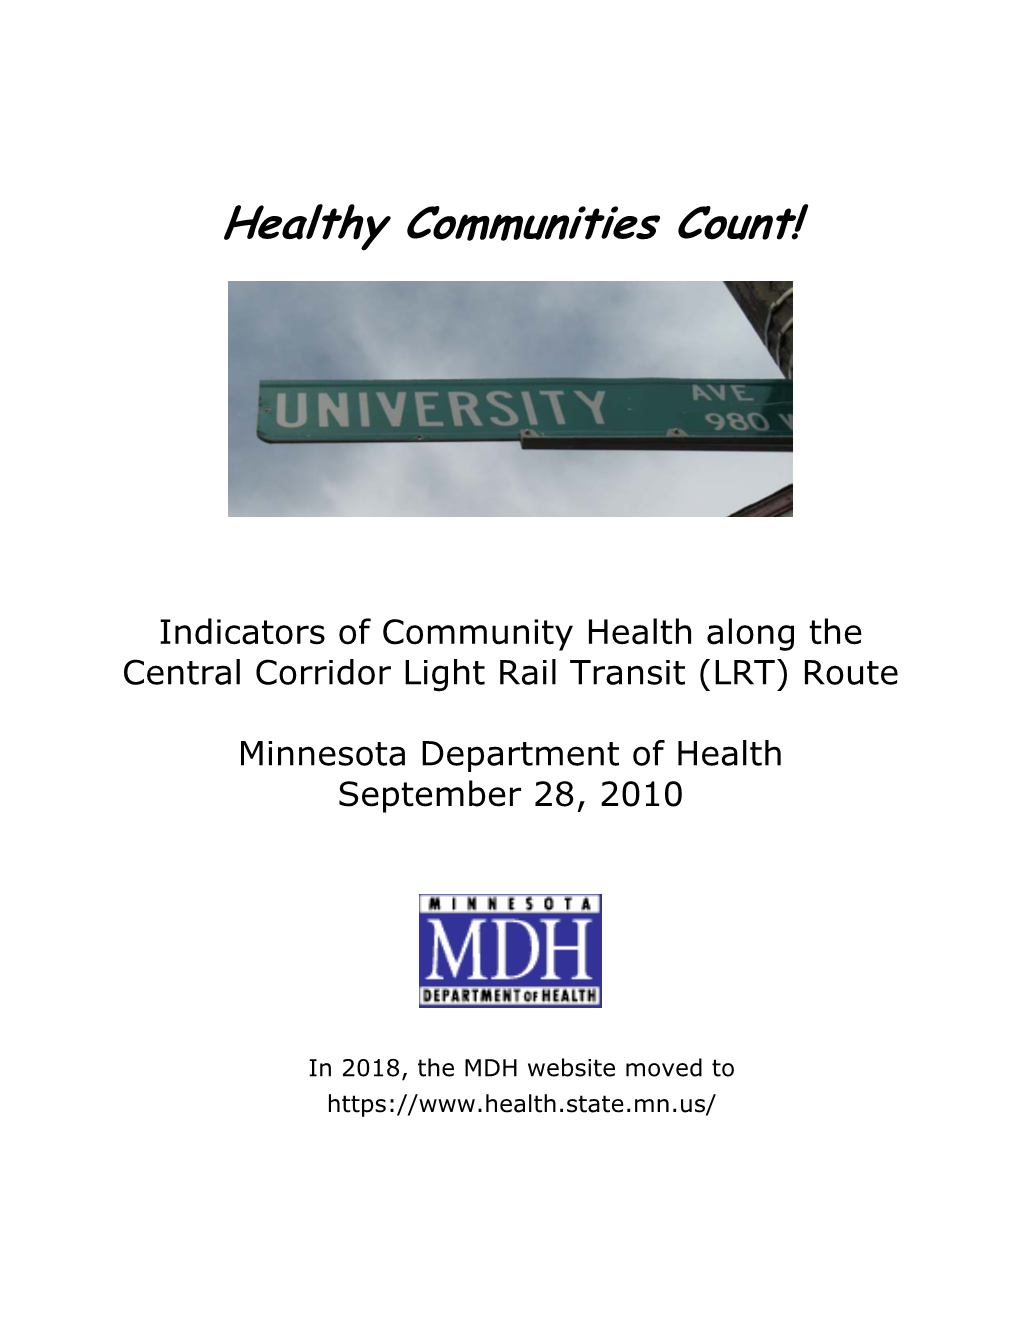 Indicators of Community Health Along the Central Corridor Light Rail Transit (LRT) Route